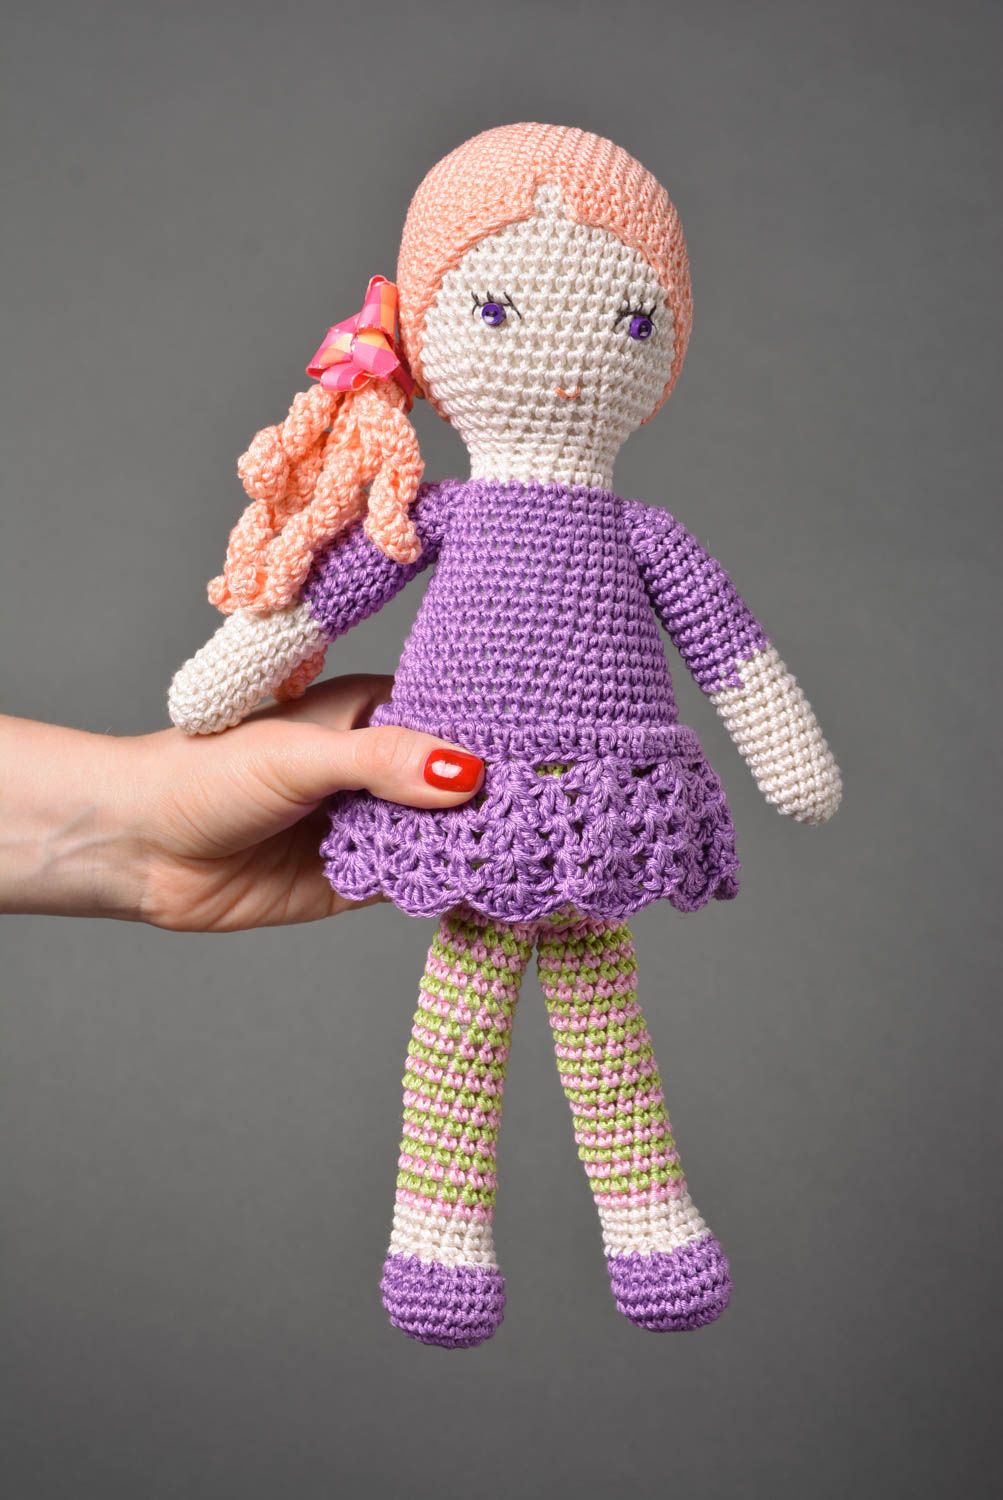 Handmade crochet toy stuffed toy soft toy for kids nursery design gift ideas photo 3